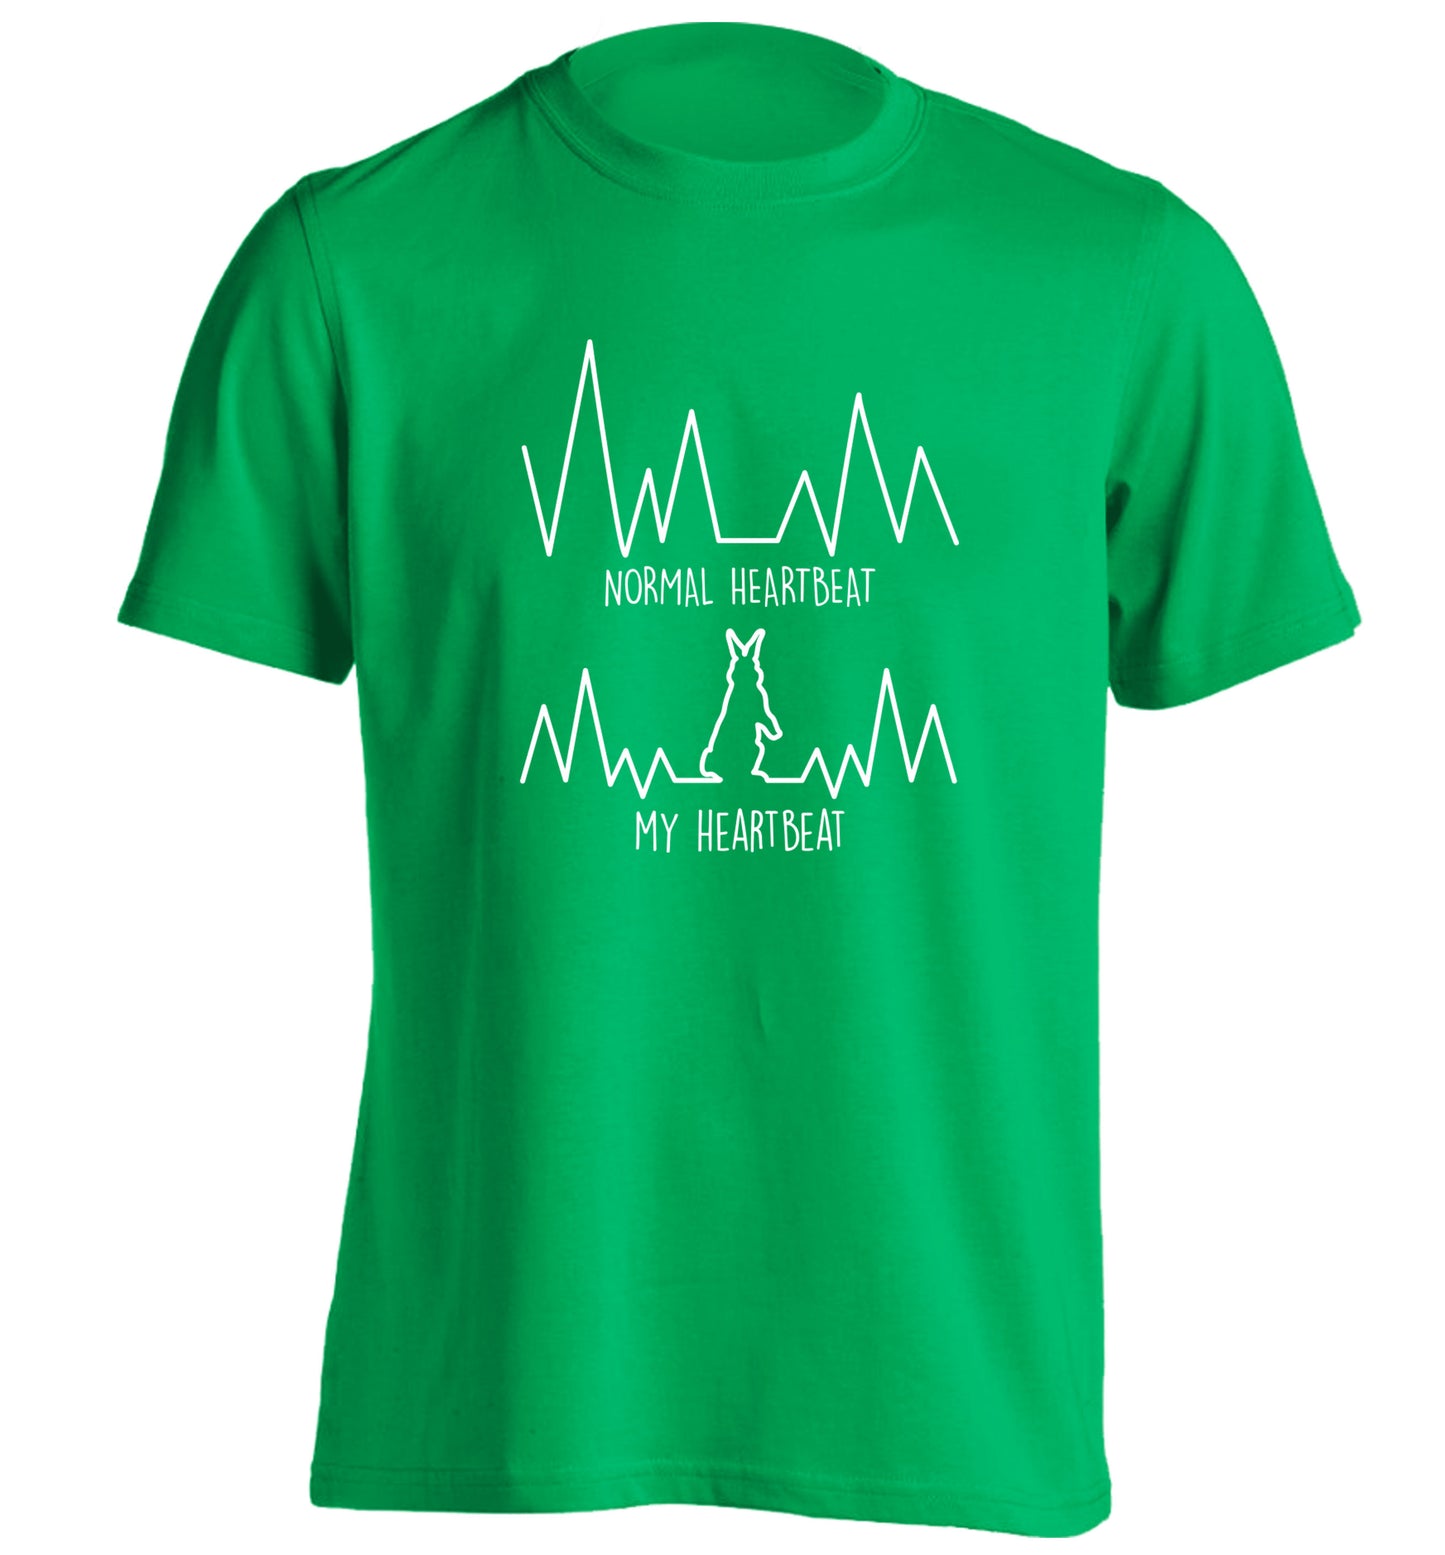 Normal heartbeat, my heartbeat rabbit lover adults unisex green Tshirt 2XL